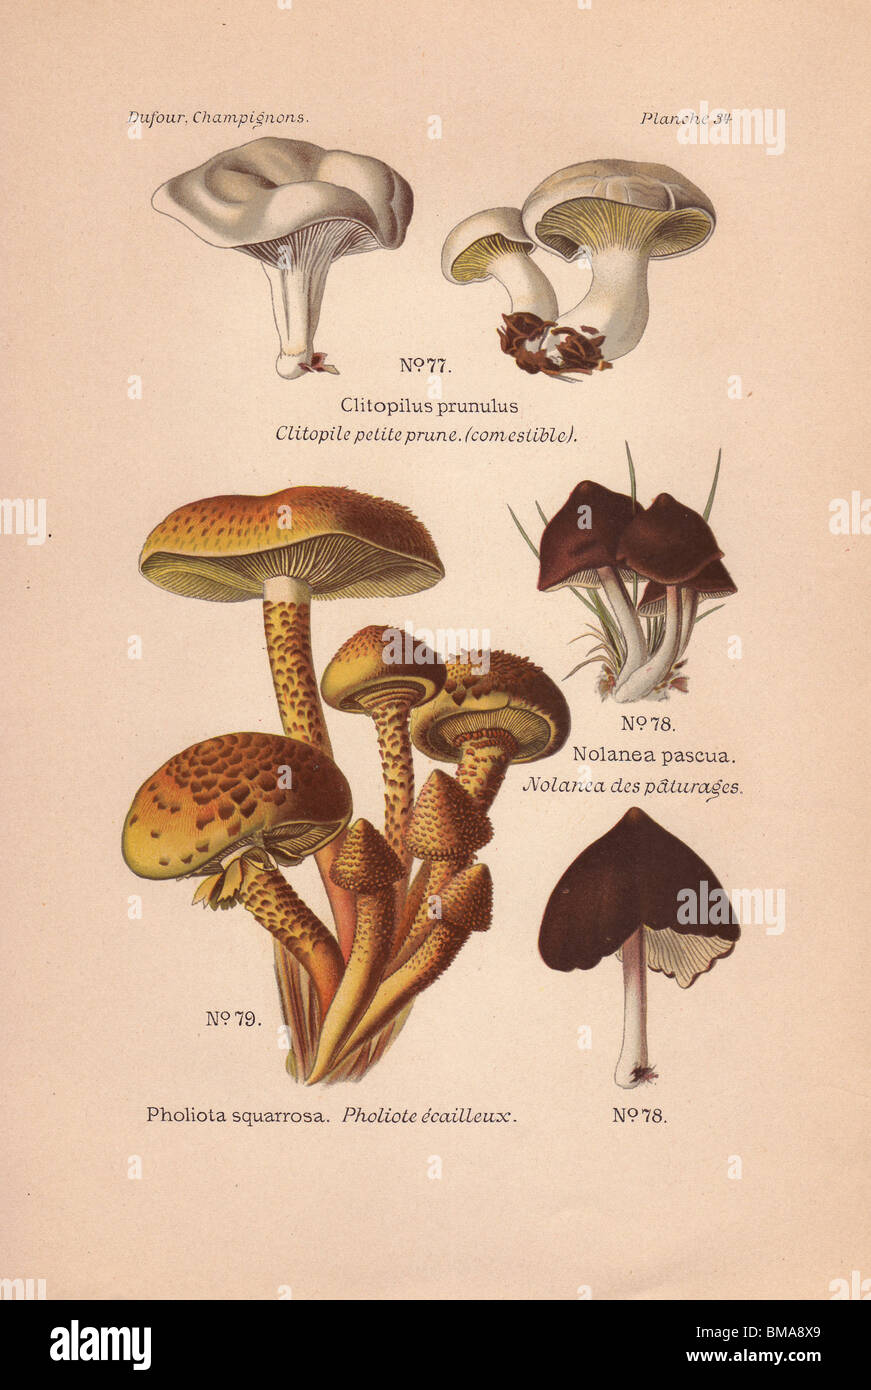 Edible sweetbread mushroom Clitopilus prunulus, shaggy Pholiota squarrosa, and Nolanea pascua mushrooms. Stock Photo